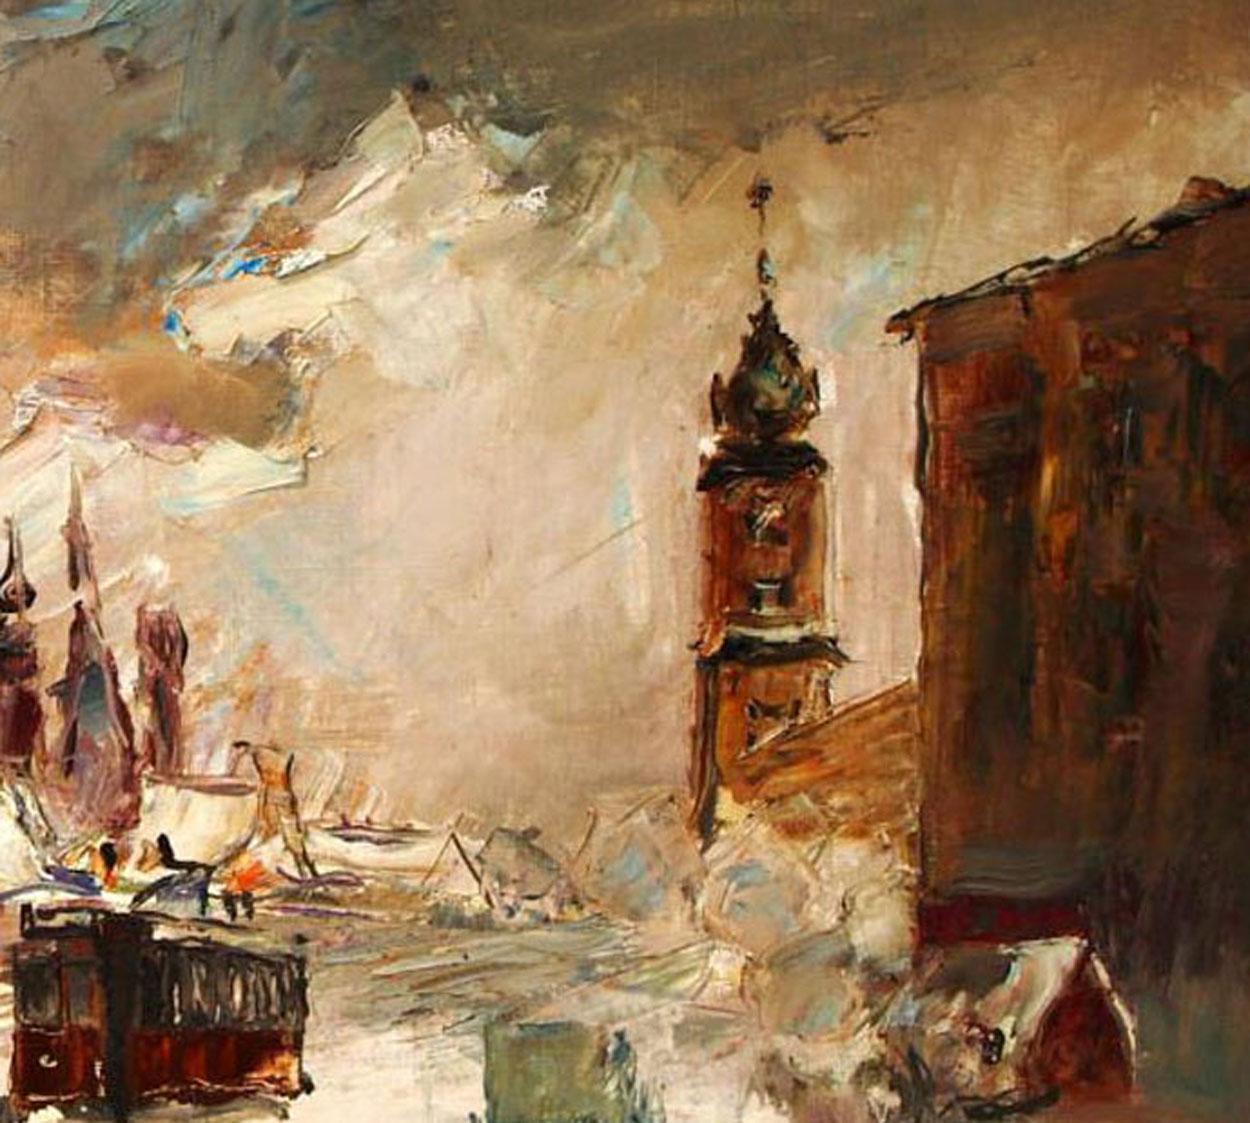 Painted Wociech Kosowski 'Polish' Oil On Canvas City Scene in Winter